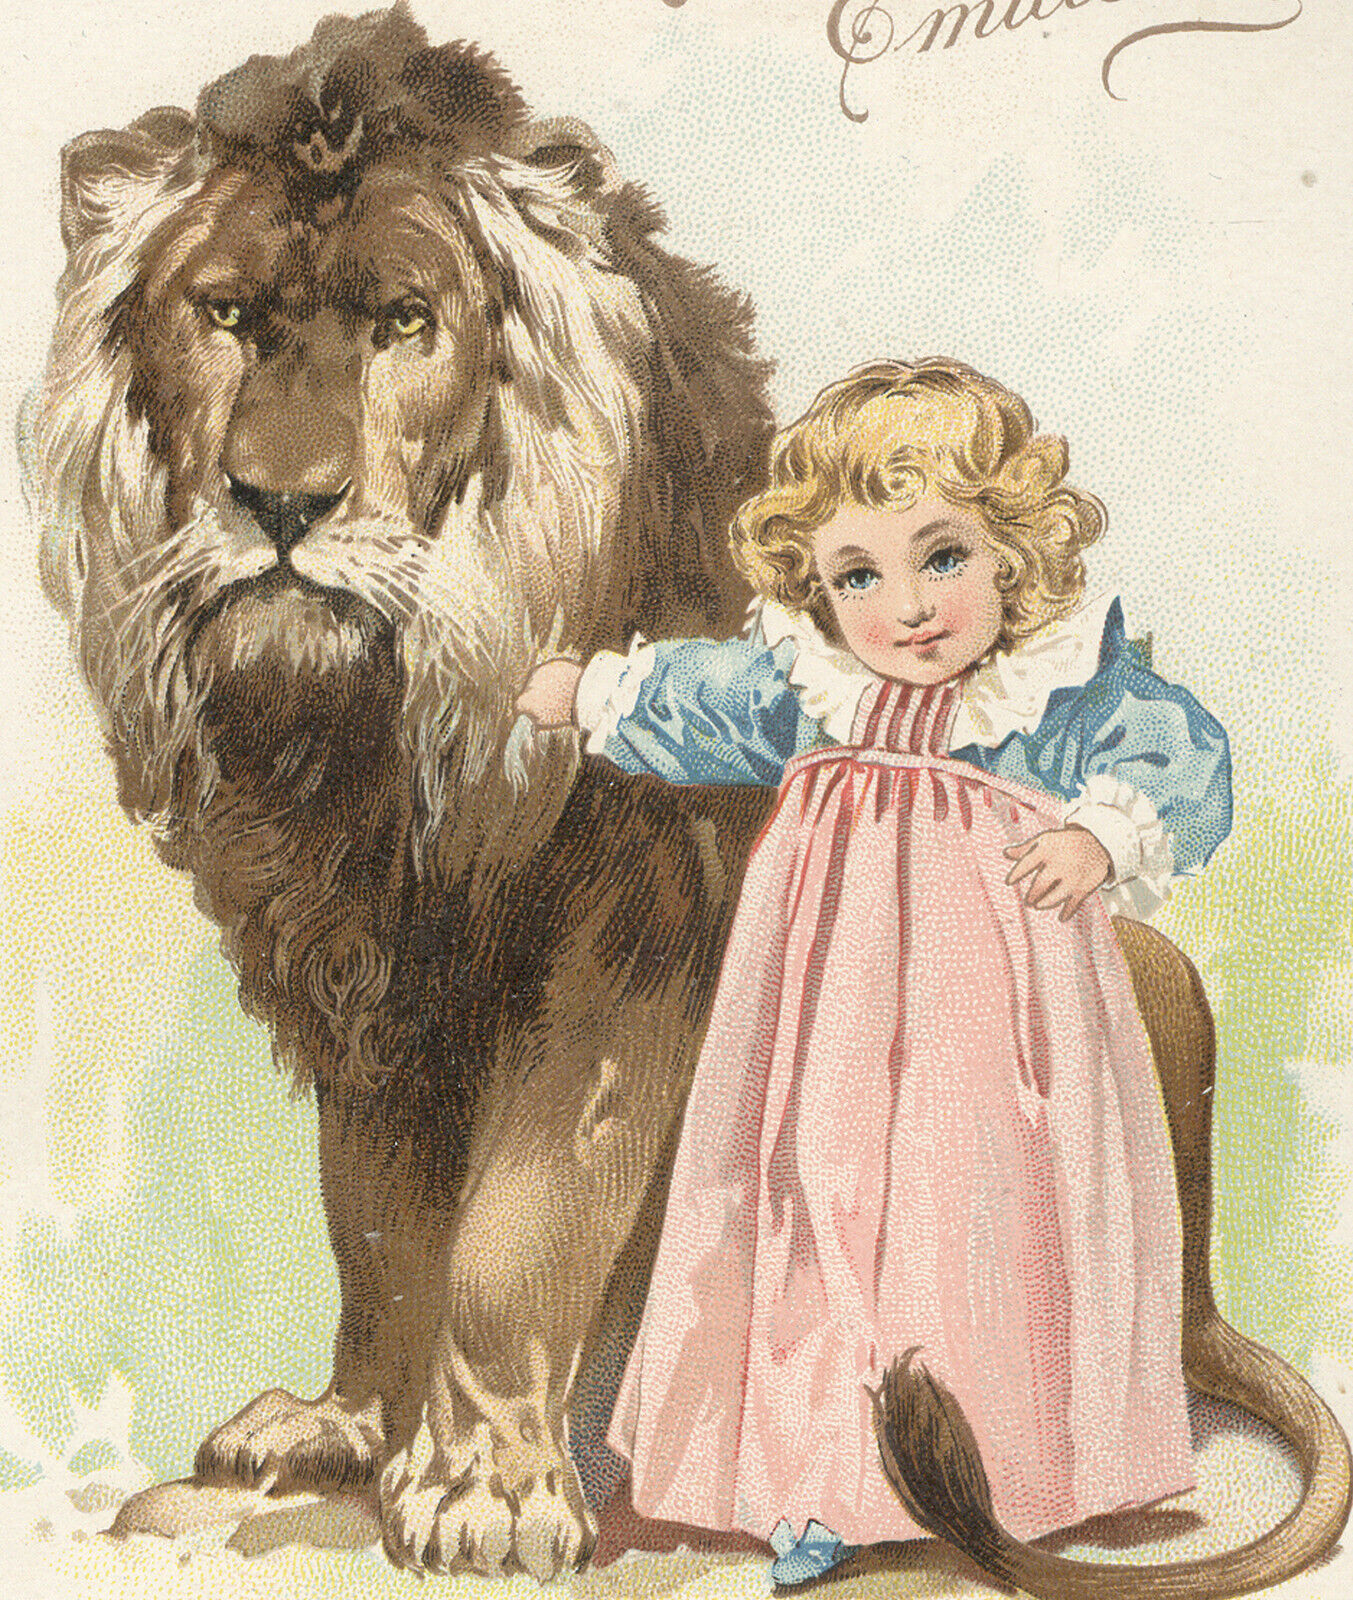 1894 SCOTT'S EMULATION TRADE CARD, STRENGTH & BEAUTY, SM GIRL & LARGE LION  V883